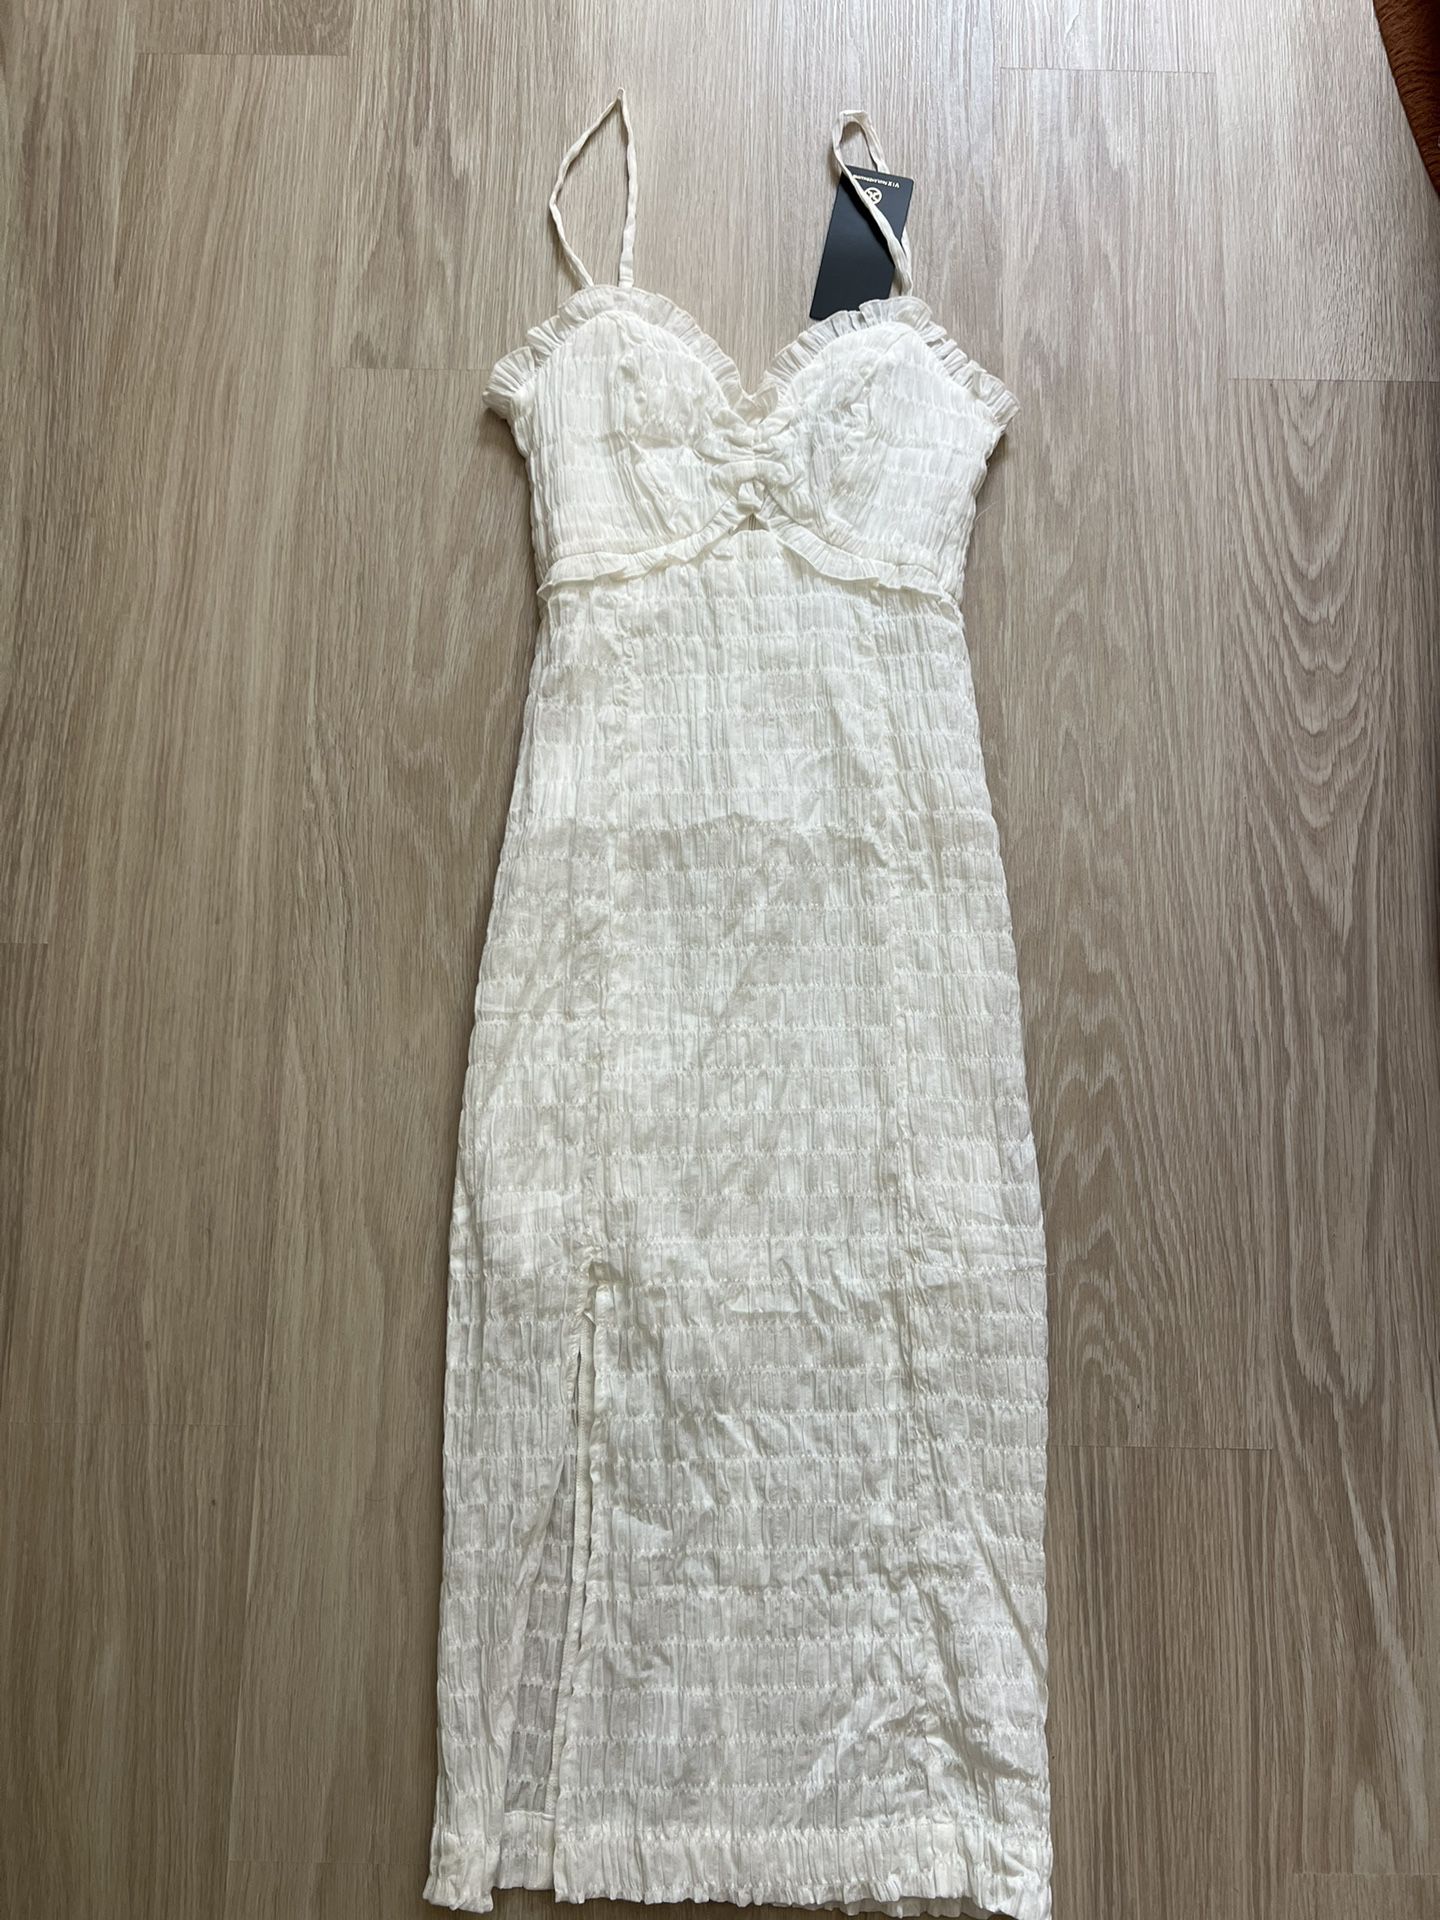 Vix White Cotton Summer Beach Dress Size S